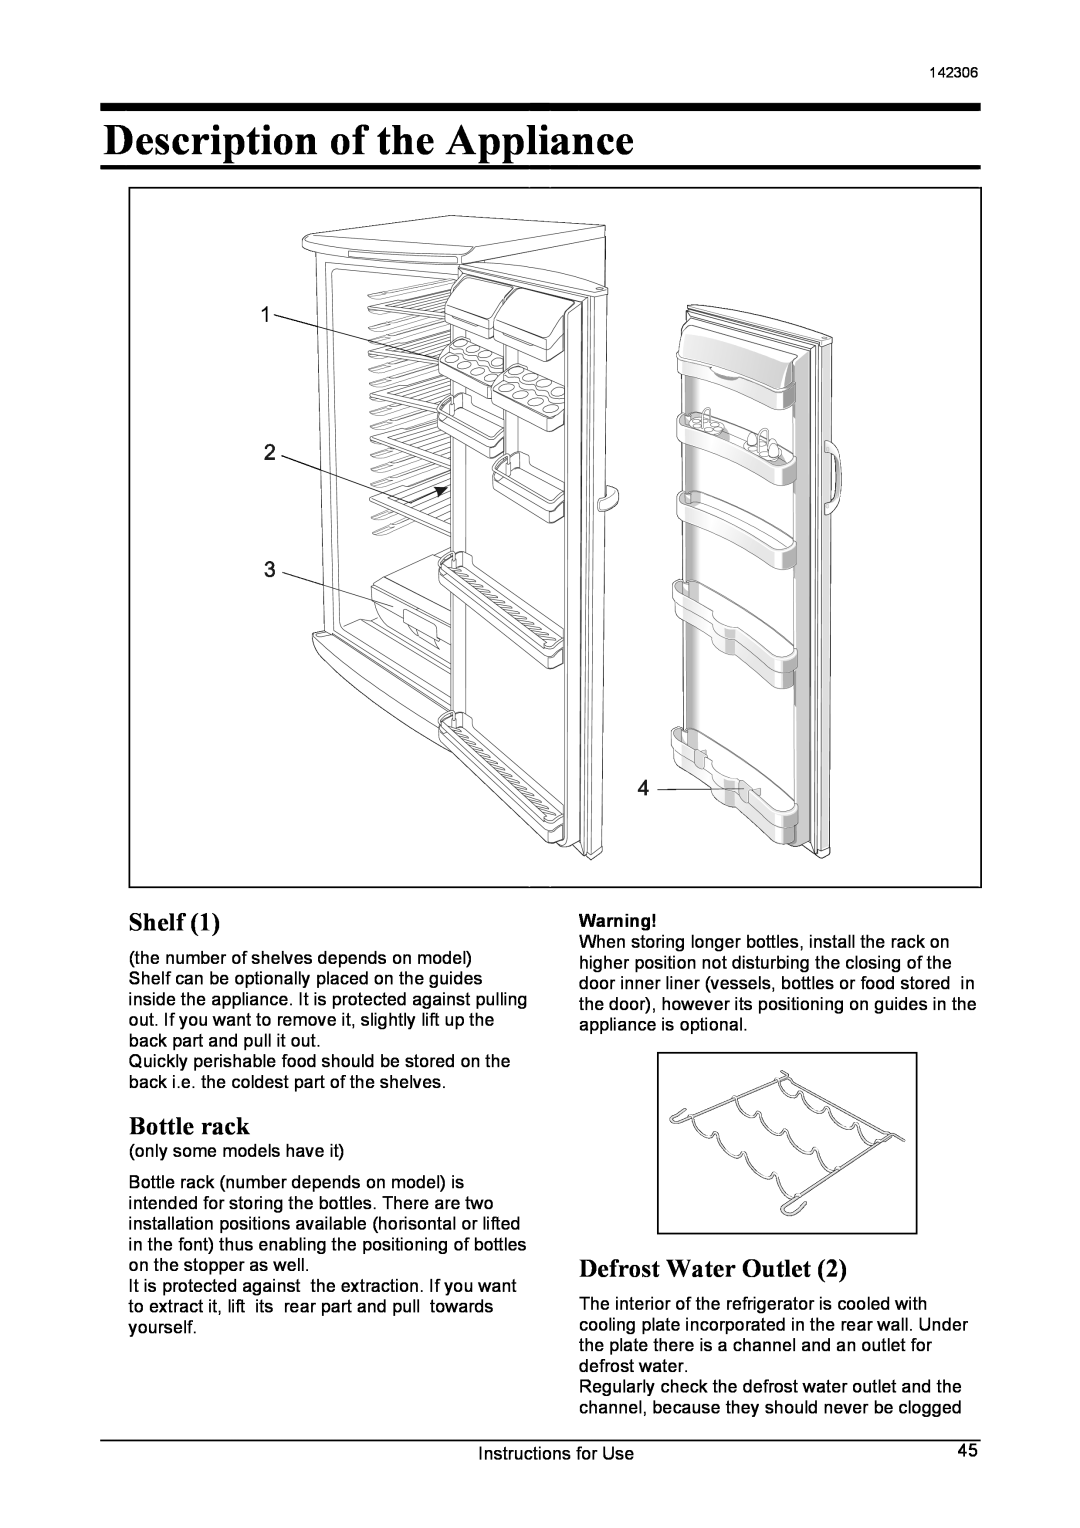 Smeg 142306 manual Description of the Appliance, Shelf, Bottle rack, Defrost Water Outlet 